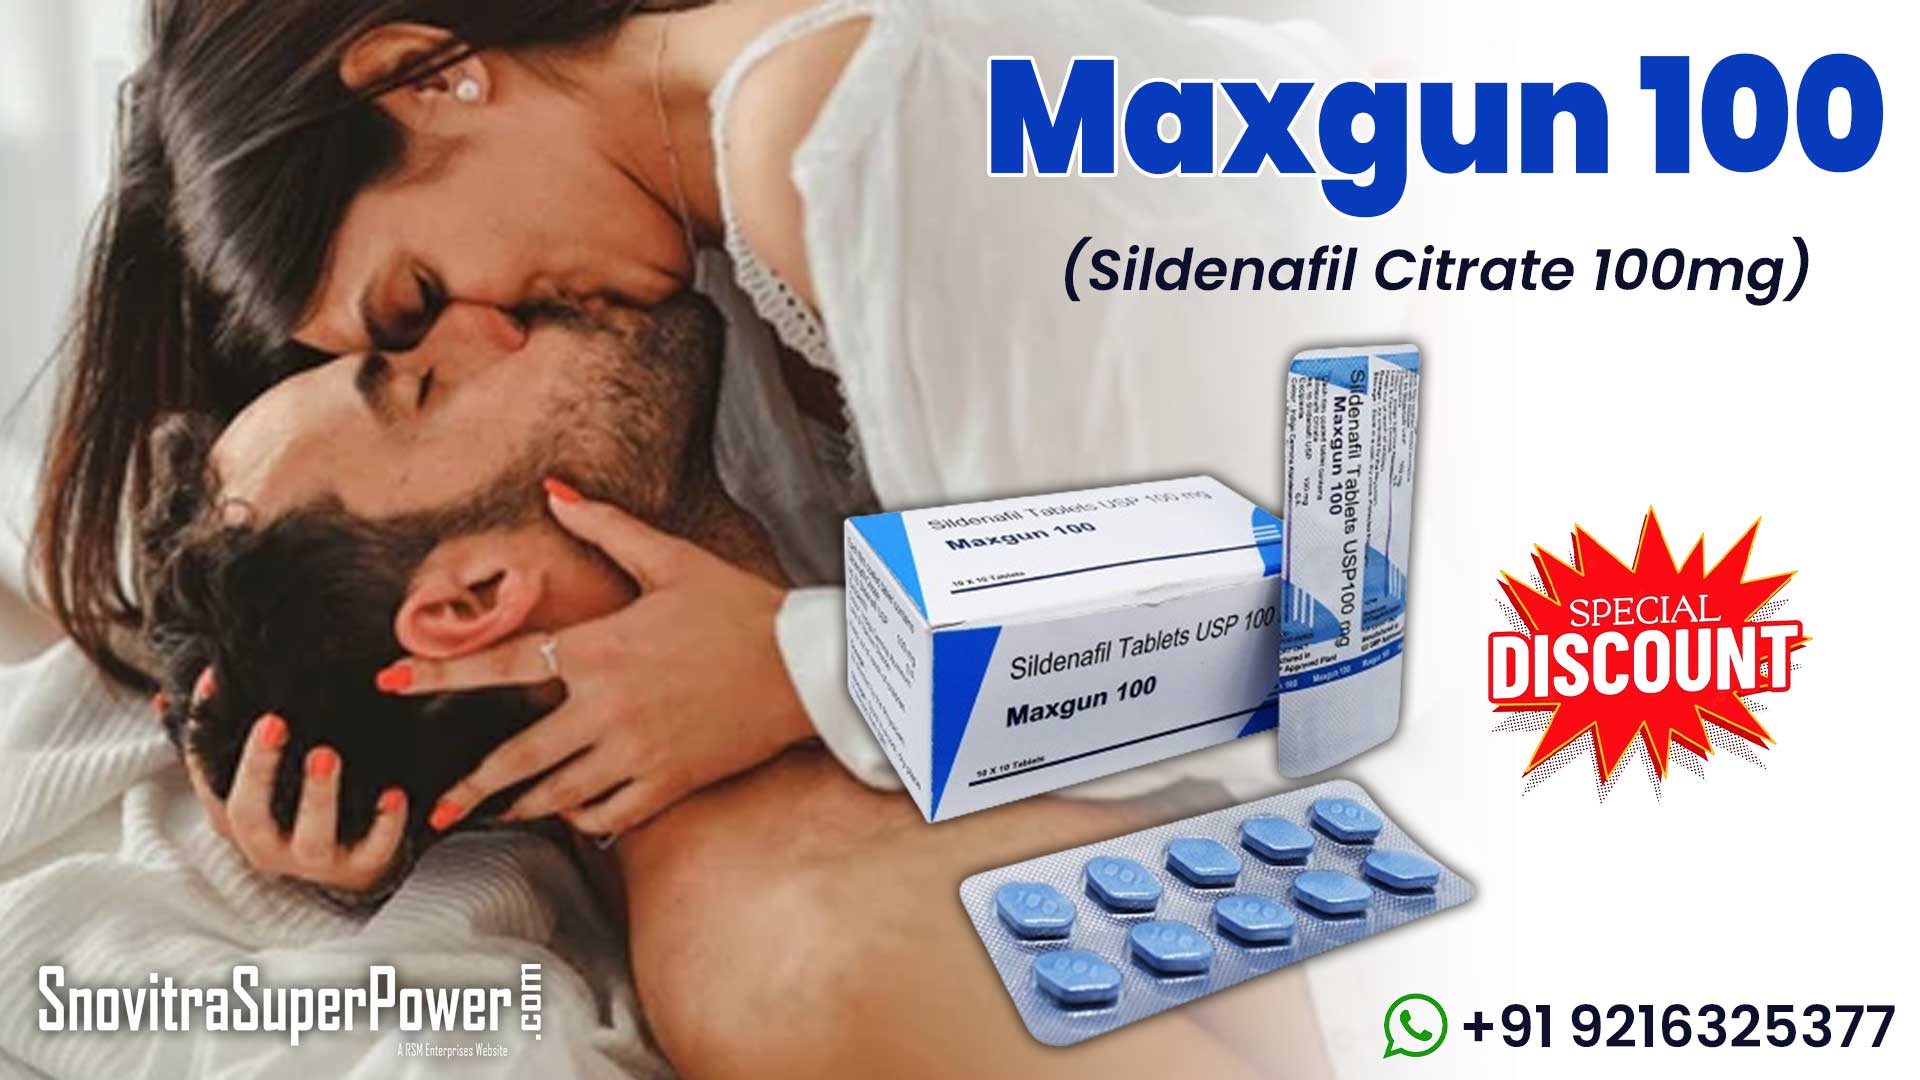 Maxgun 100mg: An Oral Medication Designed to Combat Erection Loss